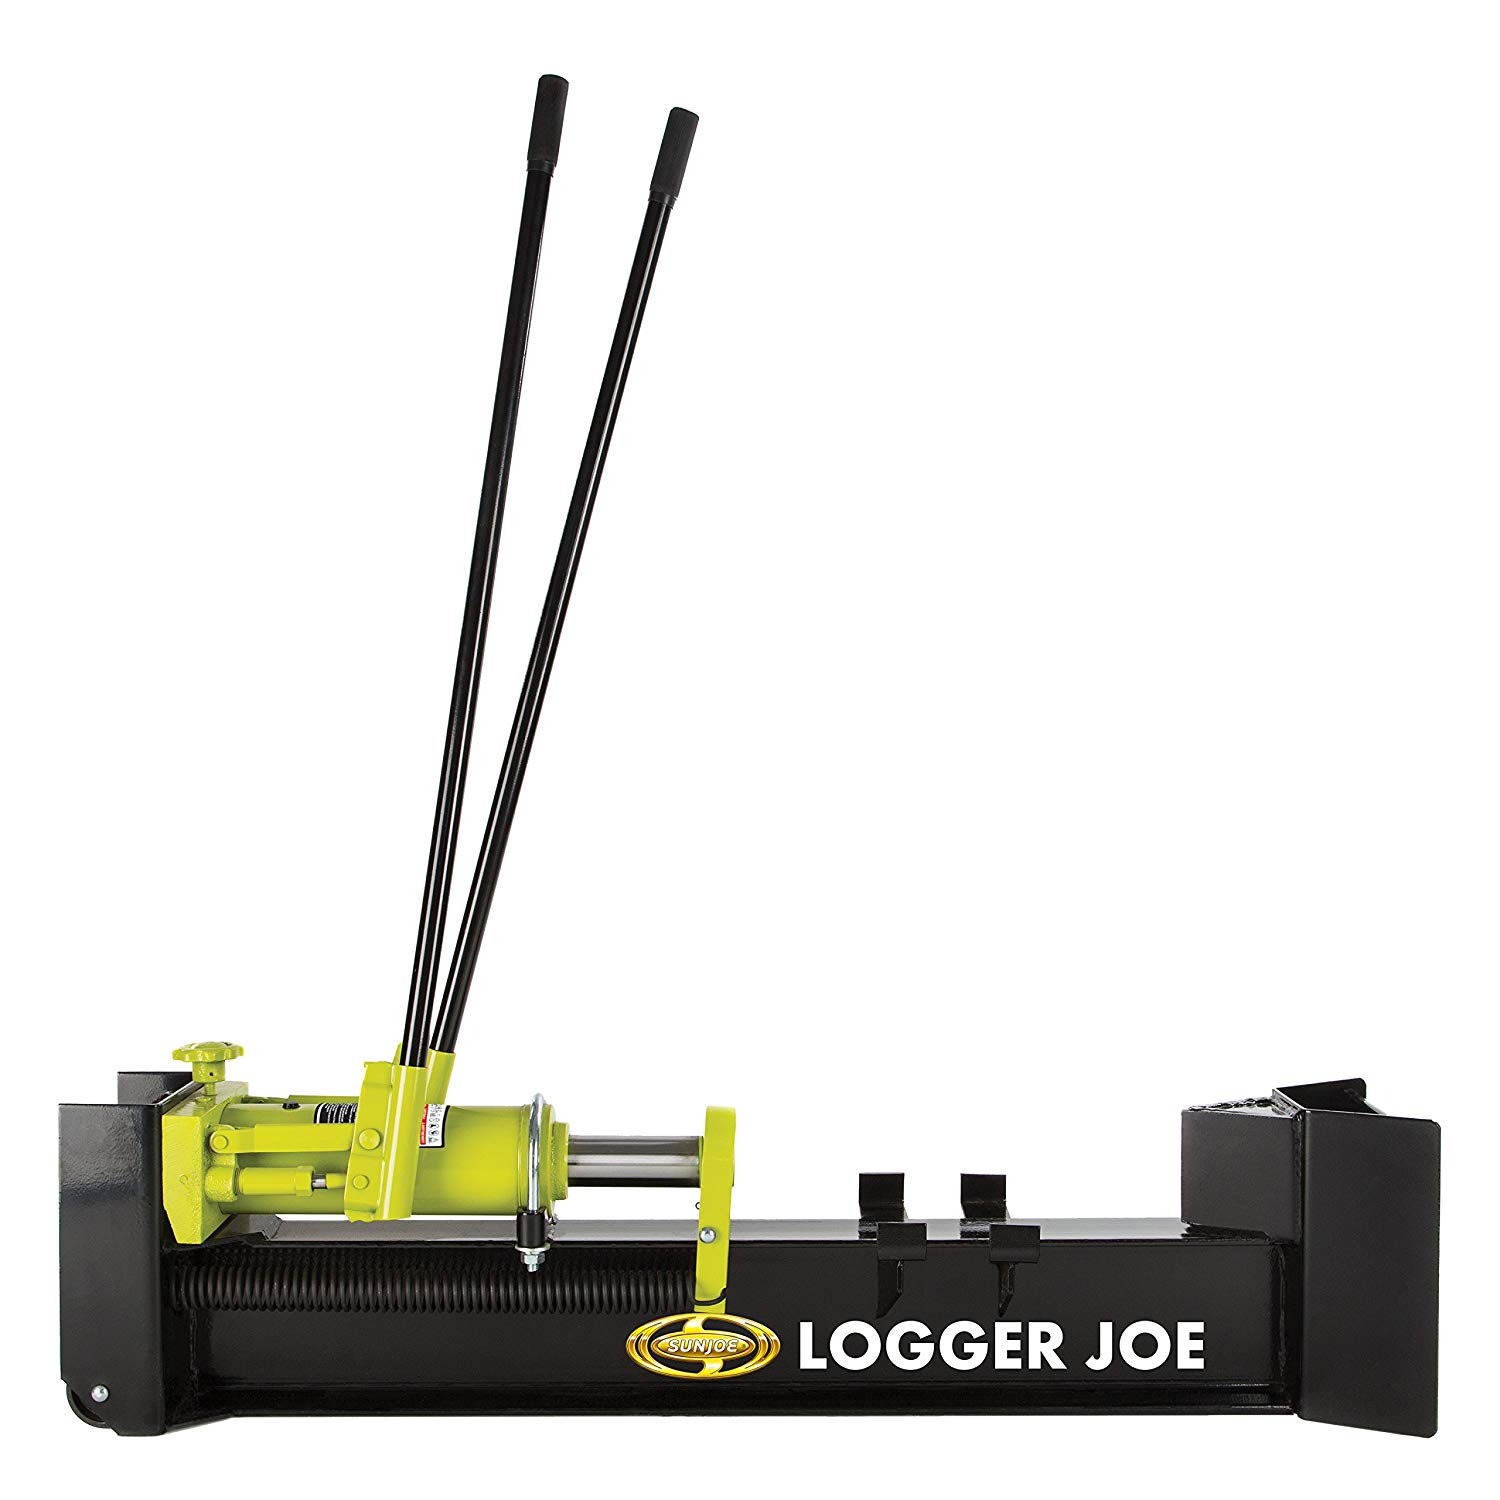 Sun Joe Logger Joe 10-Ton Hydraulic Log Splitter